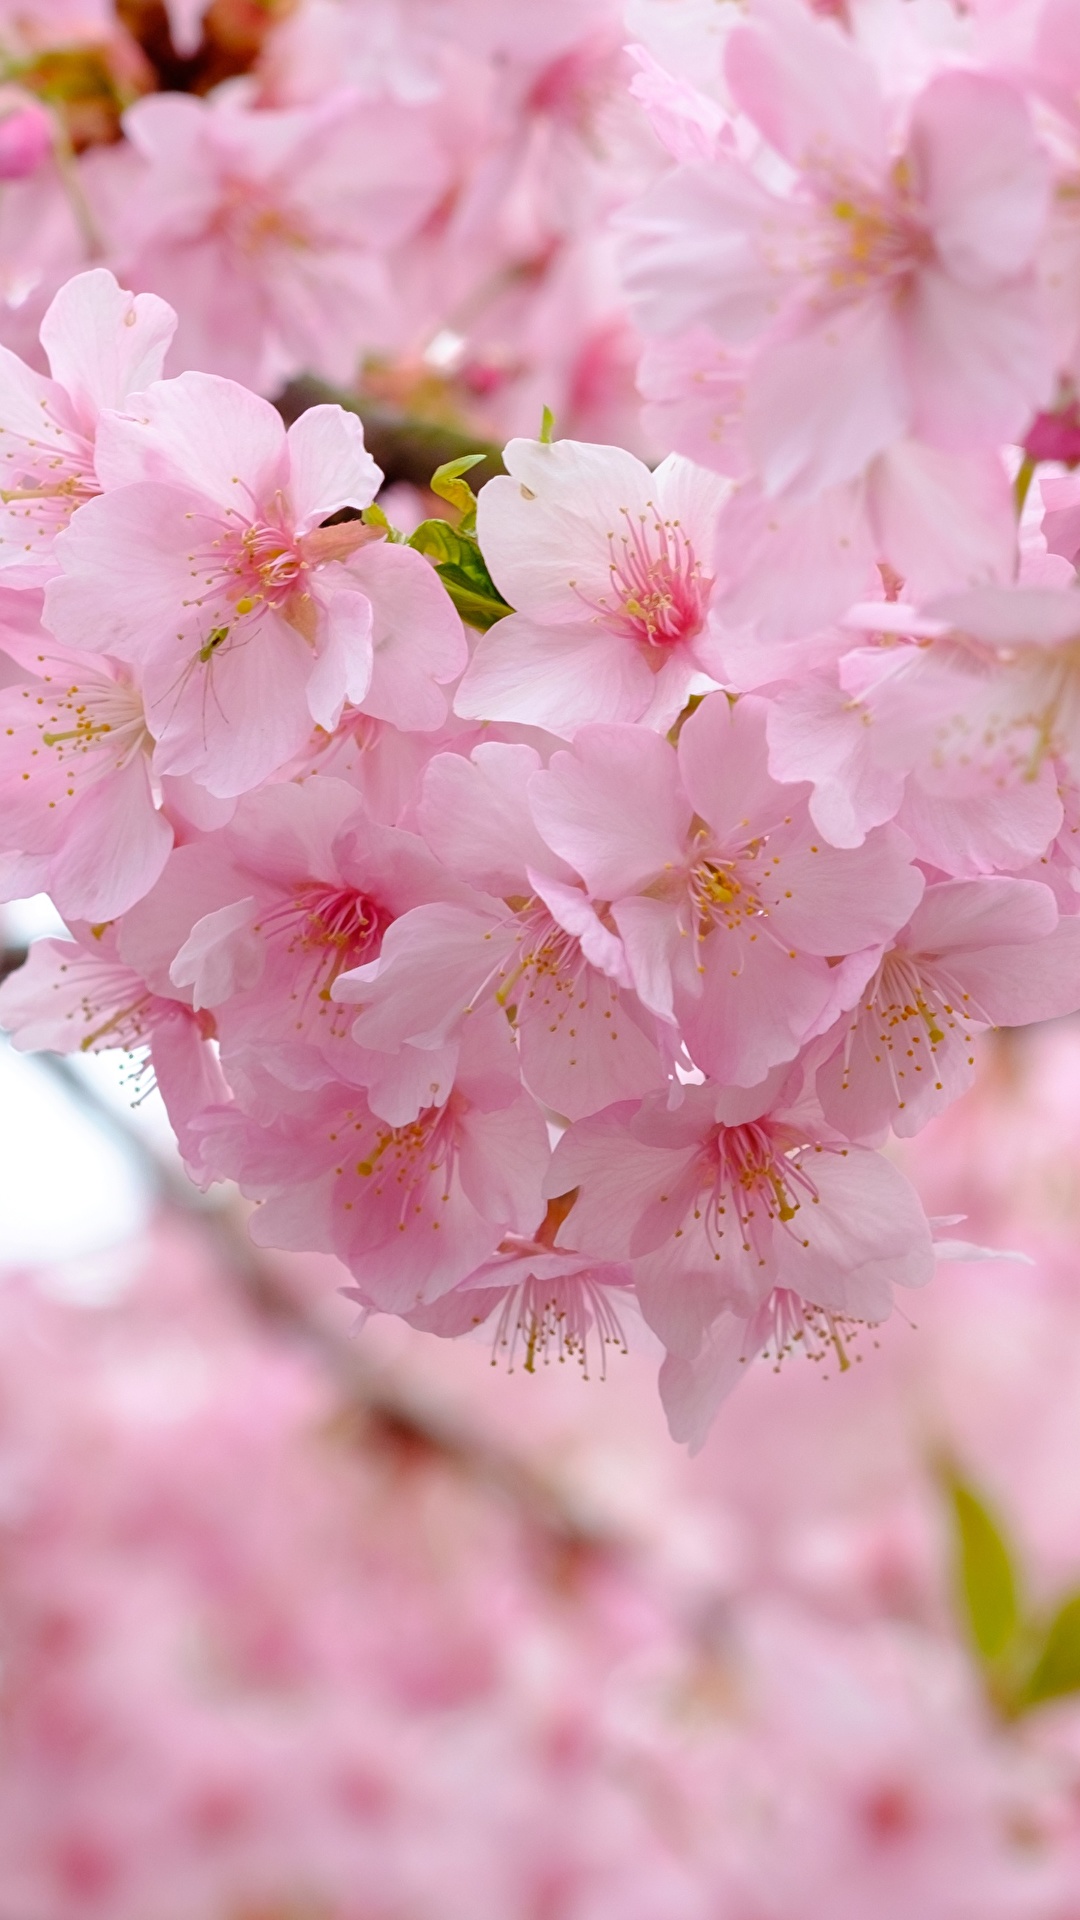 Fondos de Pantalla 1080x1920 De cerca Floración de árboles Sakura (cerezo)  Rosa color Flores descargar imagenes